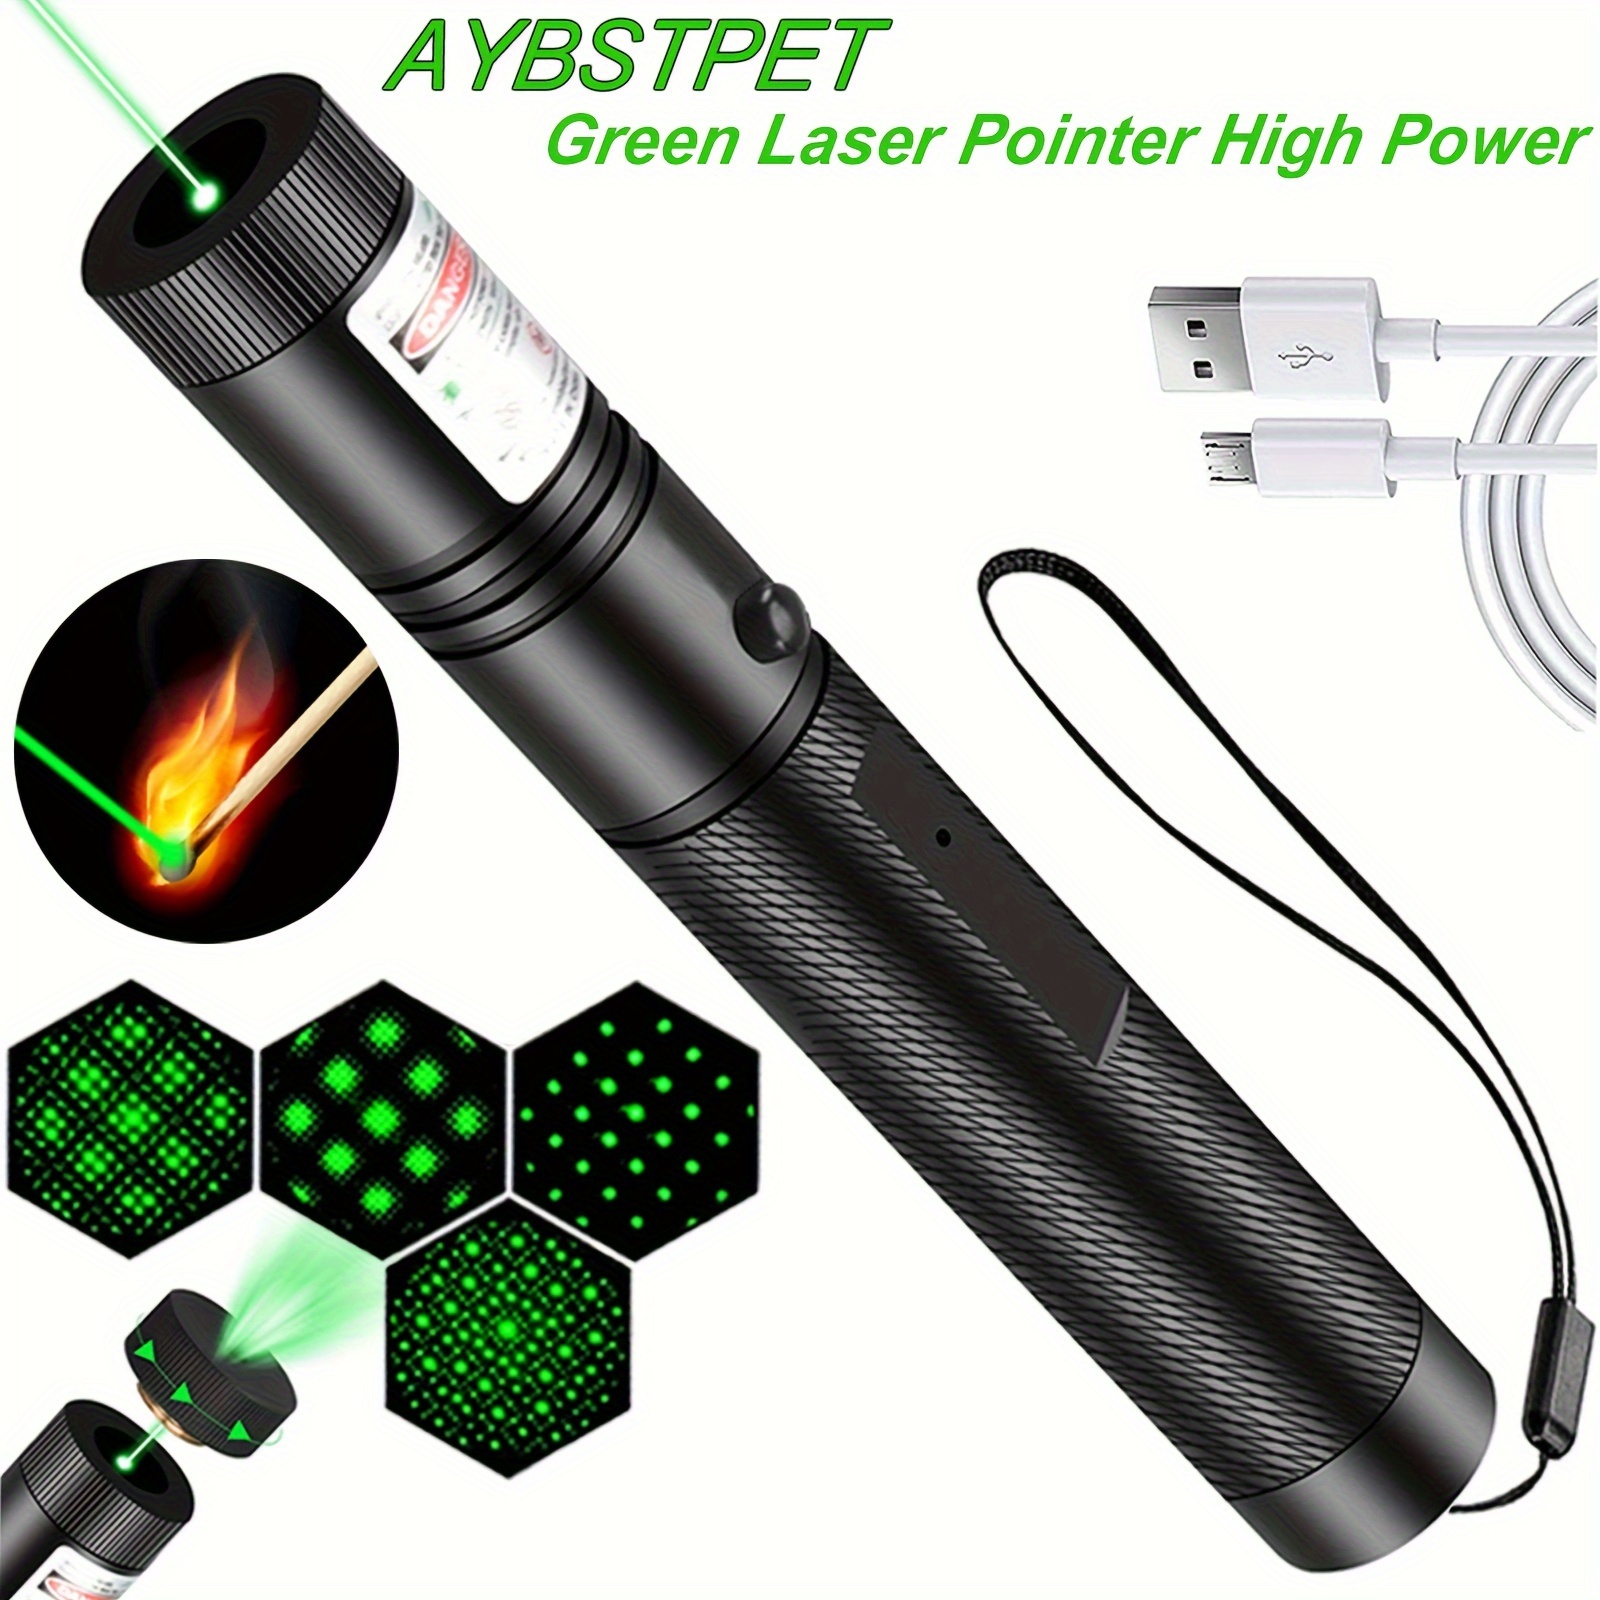 Laser Pointer High Power Green High Power Laser Pointer Long